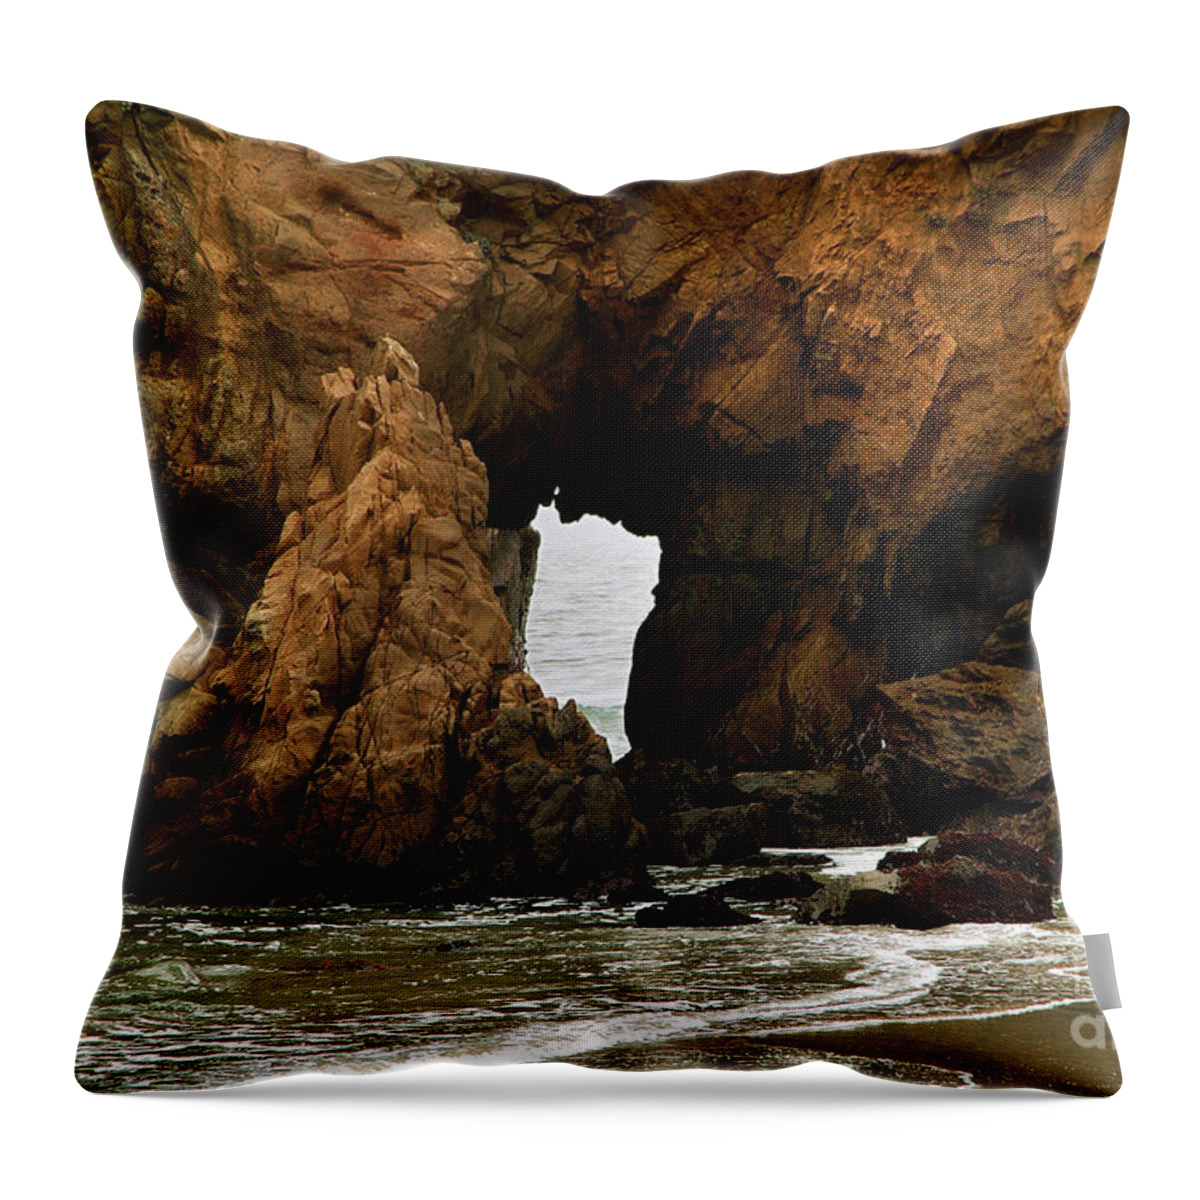 Pfeiffer Beach Throw Pillow featuring the photograph Pfeiffer Beach Rocks in Big Sur by Charlene Mitchell